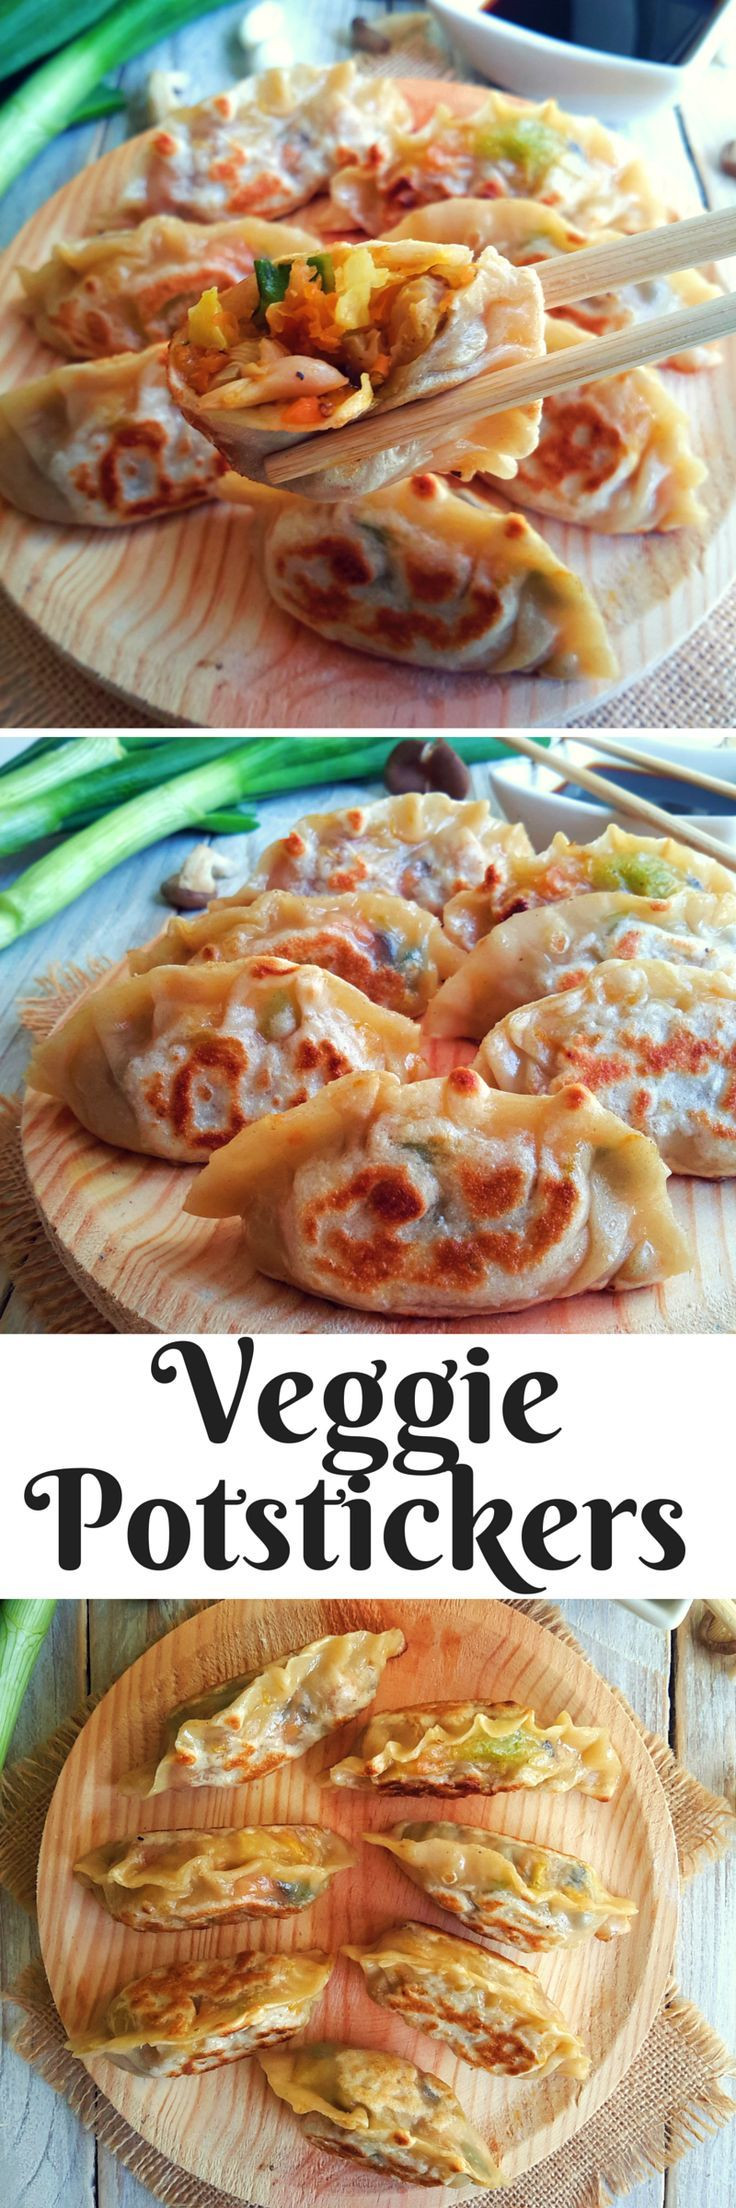 Vegetarian Asian Appetizers
 The 25 best Vegan recipes ideas on Pinterest